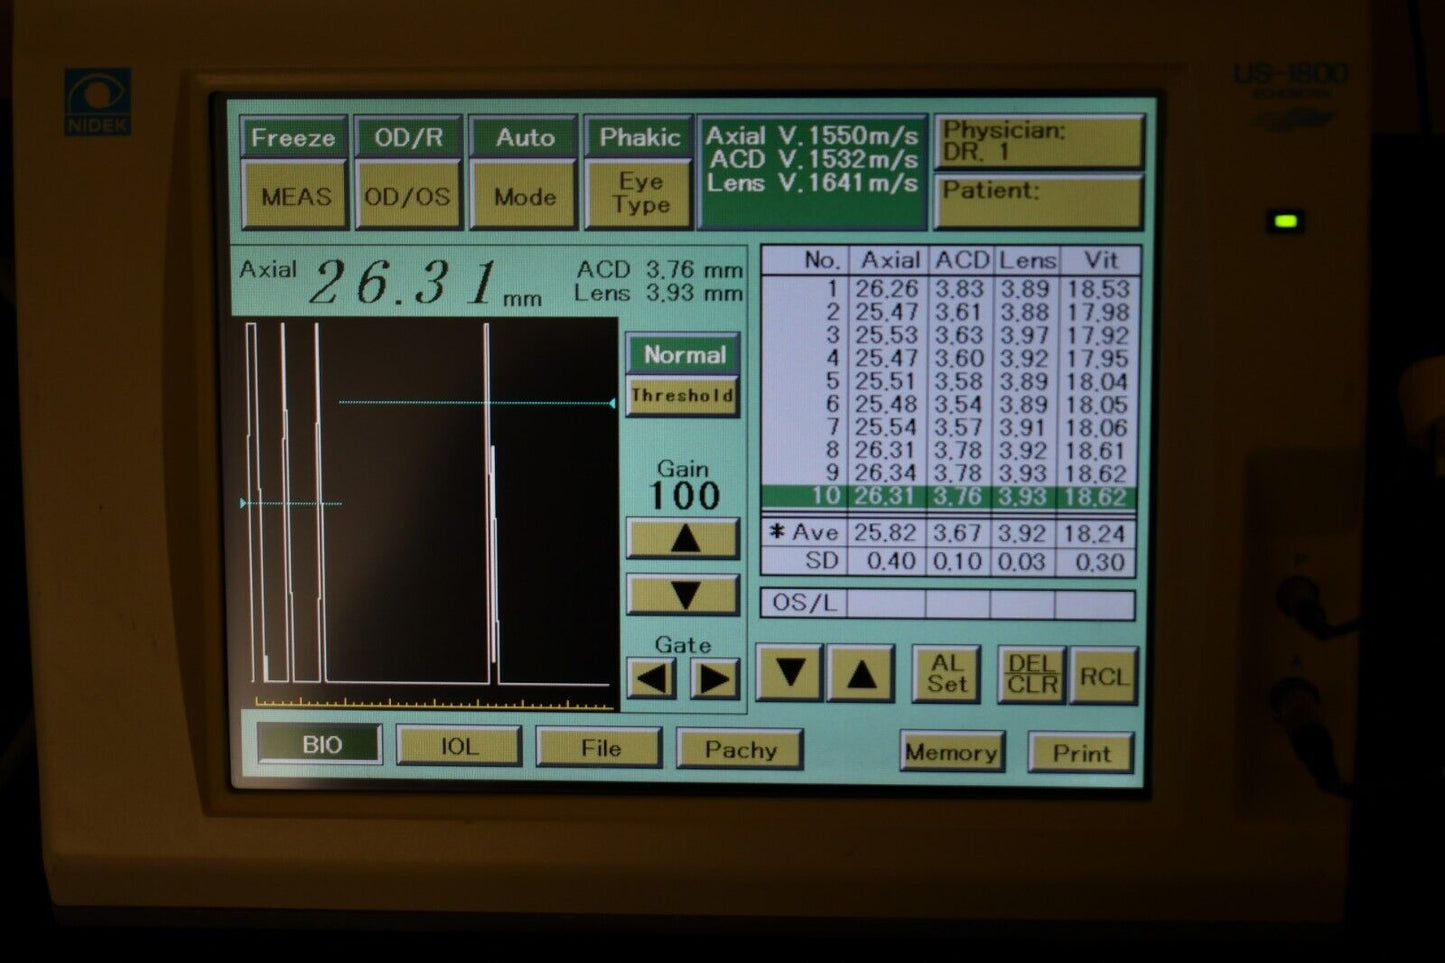 Nidek US-1800 Ultrasound A-scan and Pachymeter Biometer